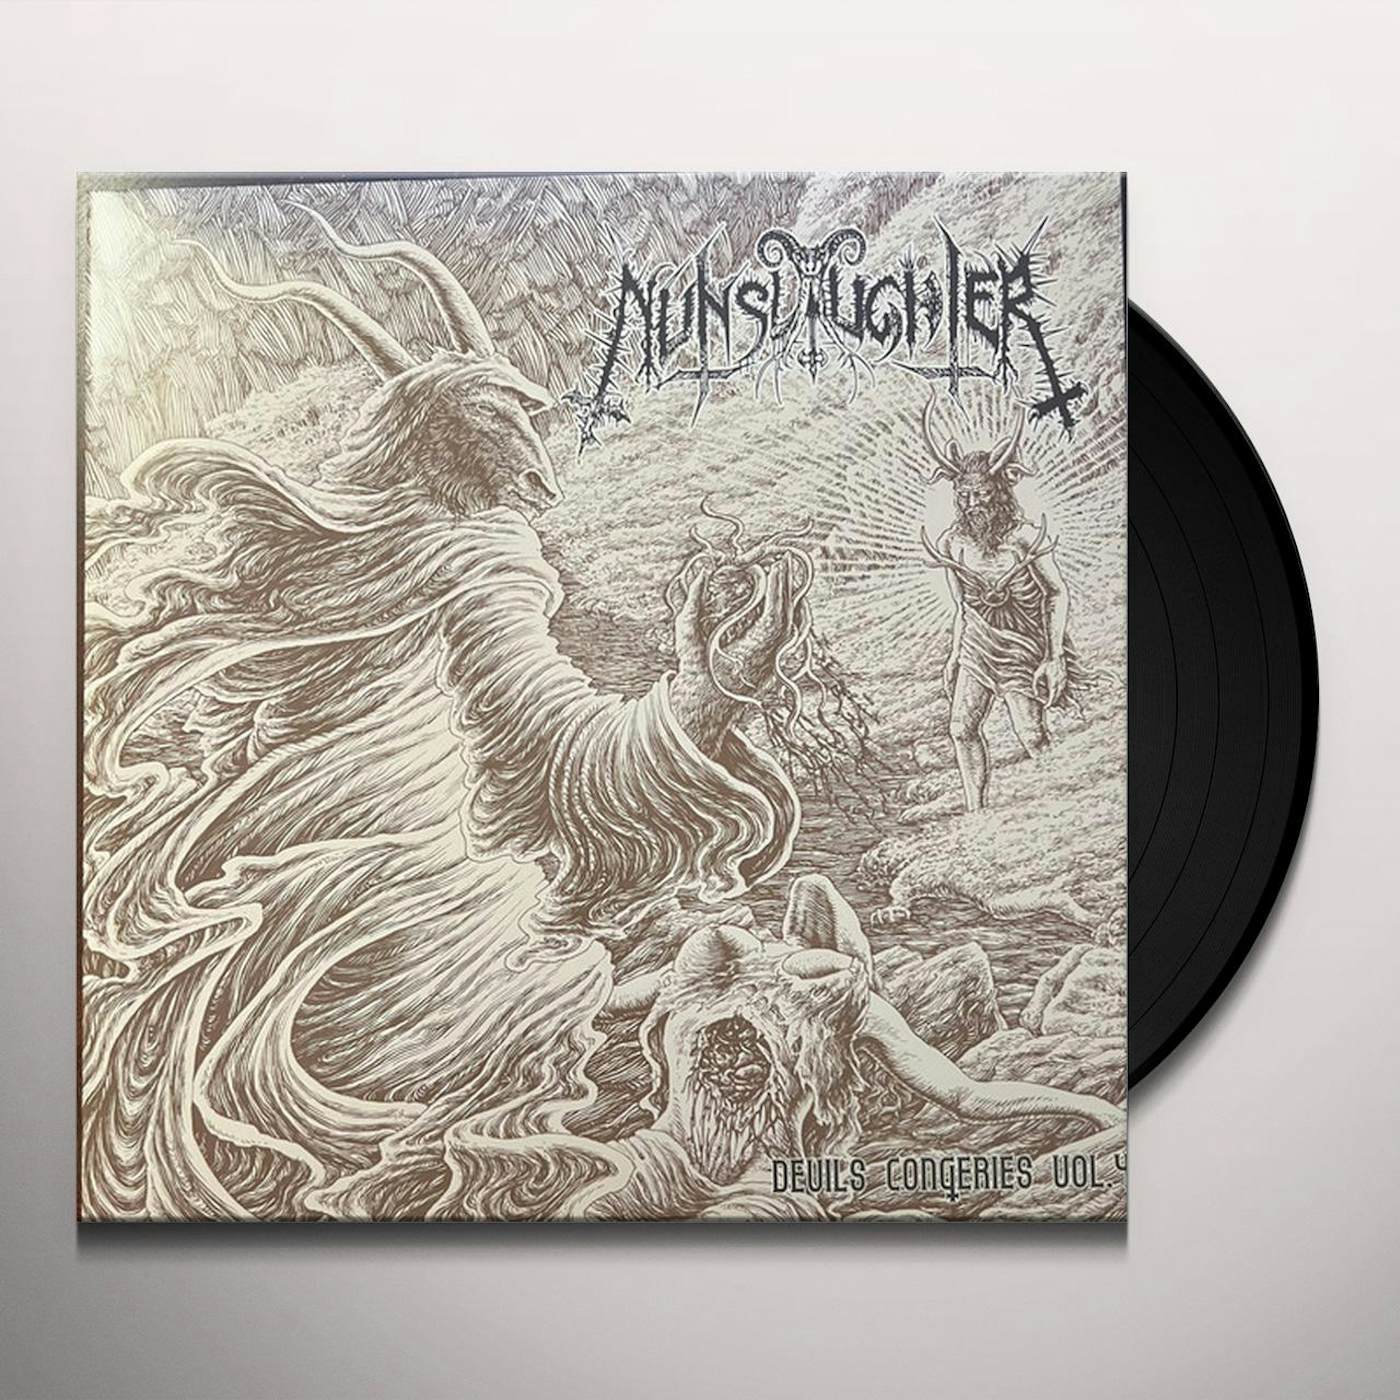 Nunslaughter DEVIL'S CONGERIES VOL 4 Vinyl Record